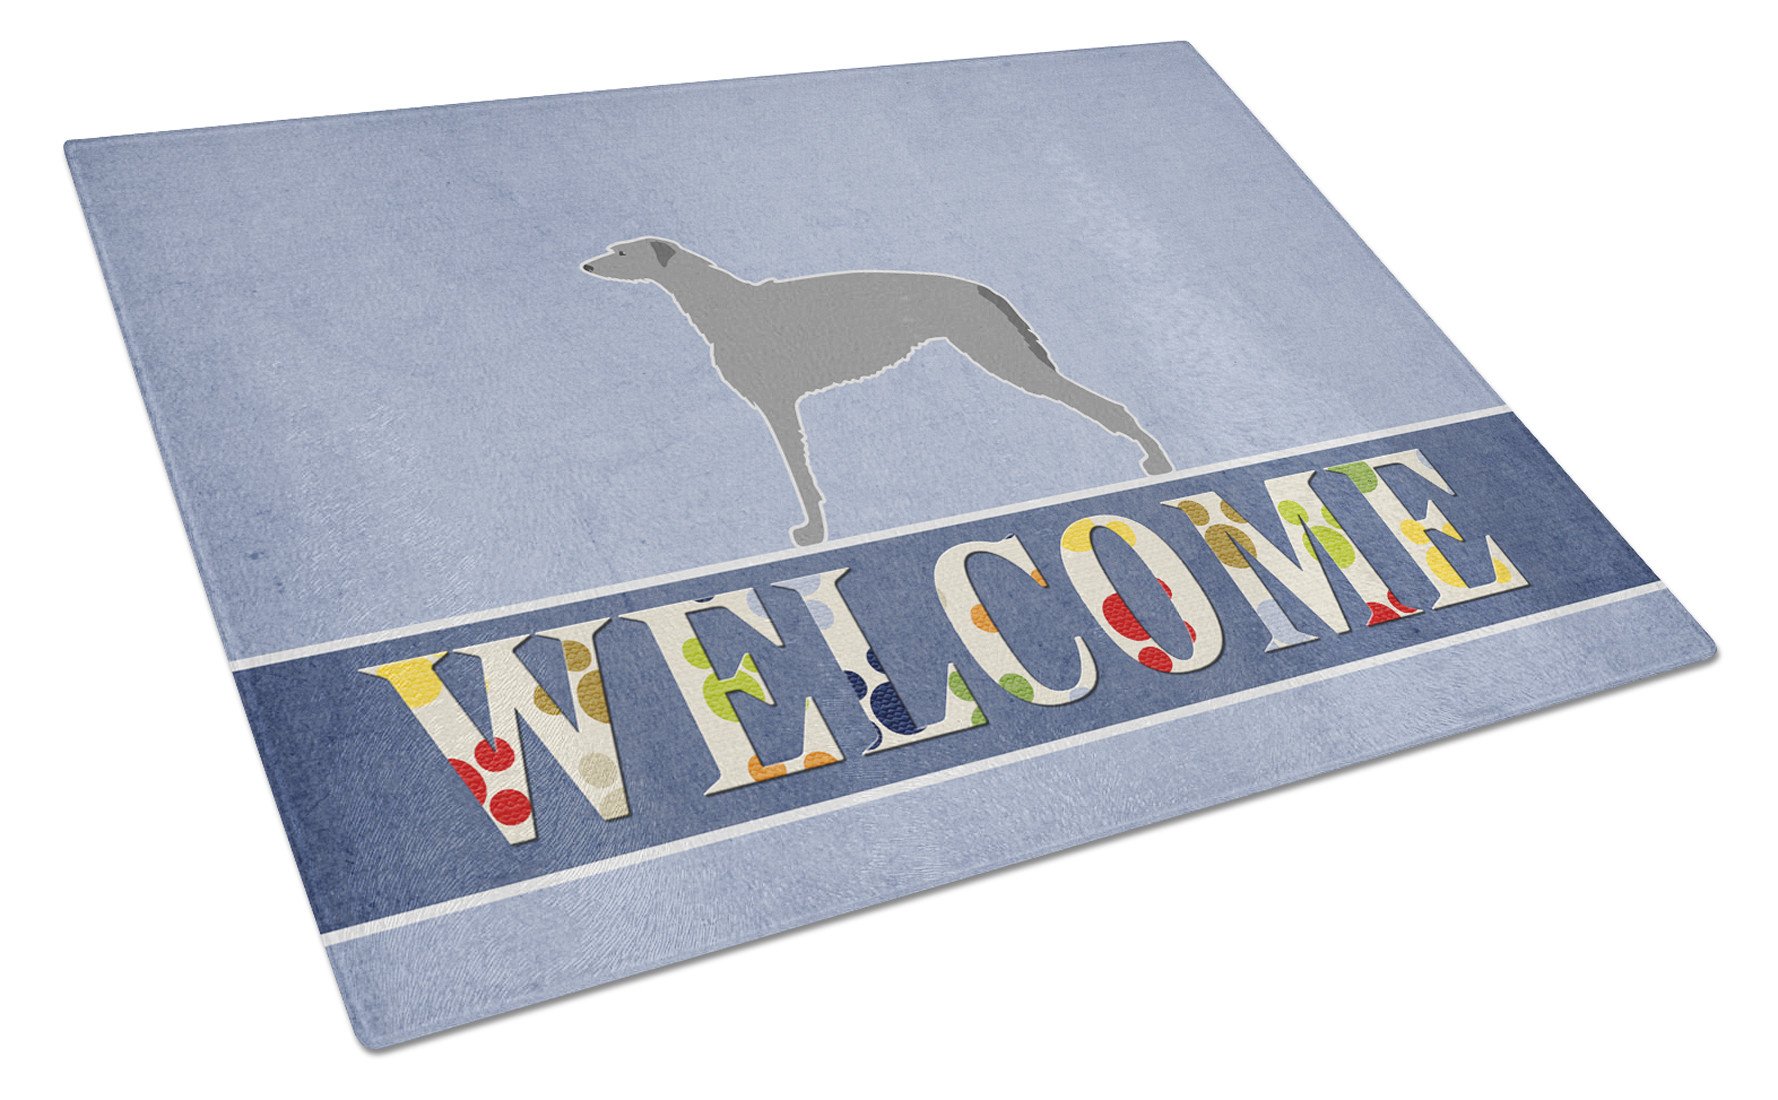 Scottish Deerhound Welcome Glass Cutting Board Large BB5500LCB by Caroline's Treasures